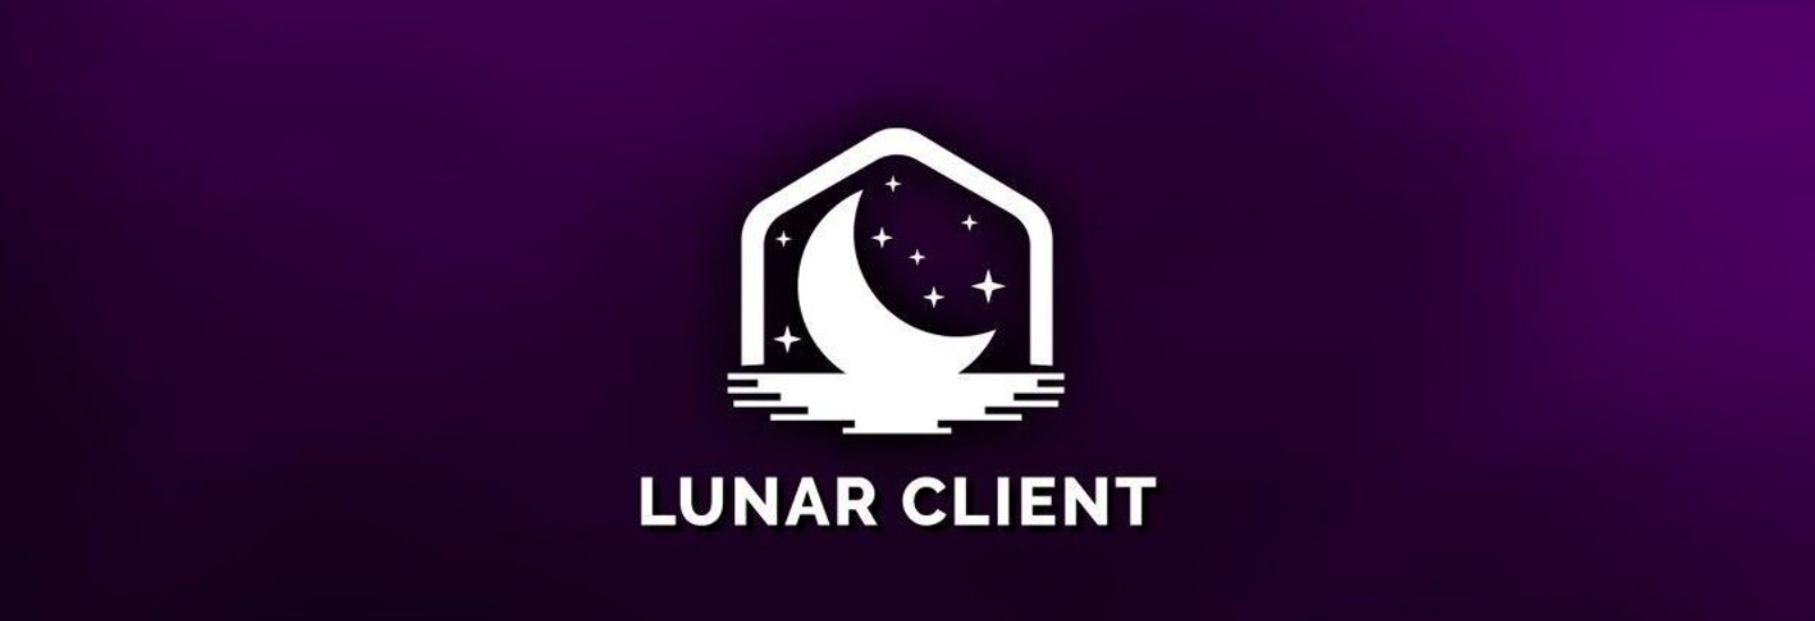 Lunar crack. Лунар клиент. Лунар значок. Иконка Лунар клиента. Картинки Lunar client.